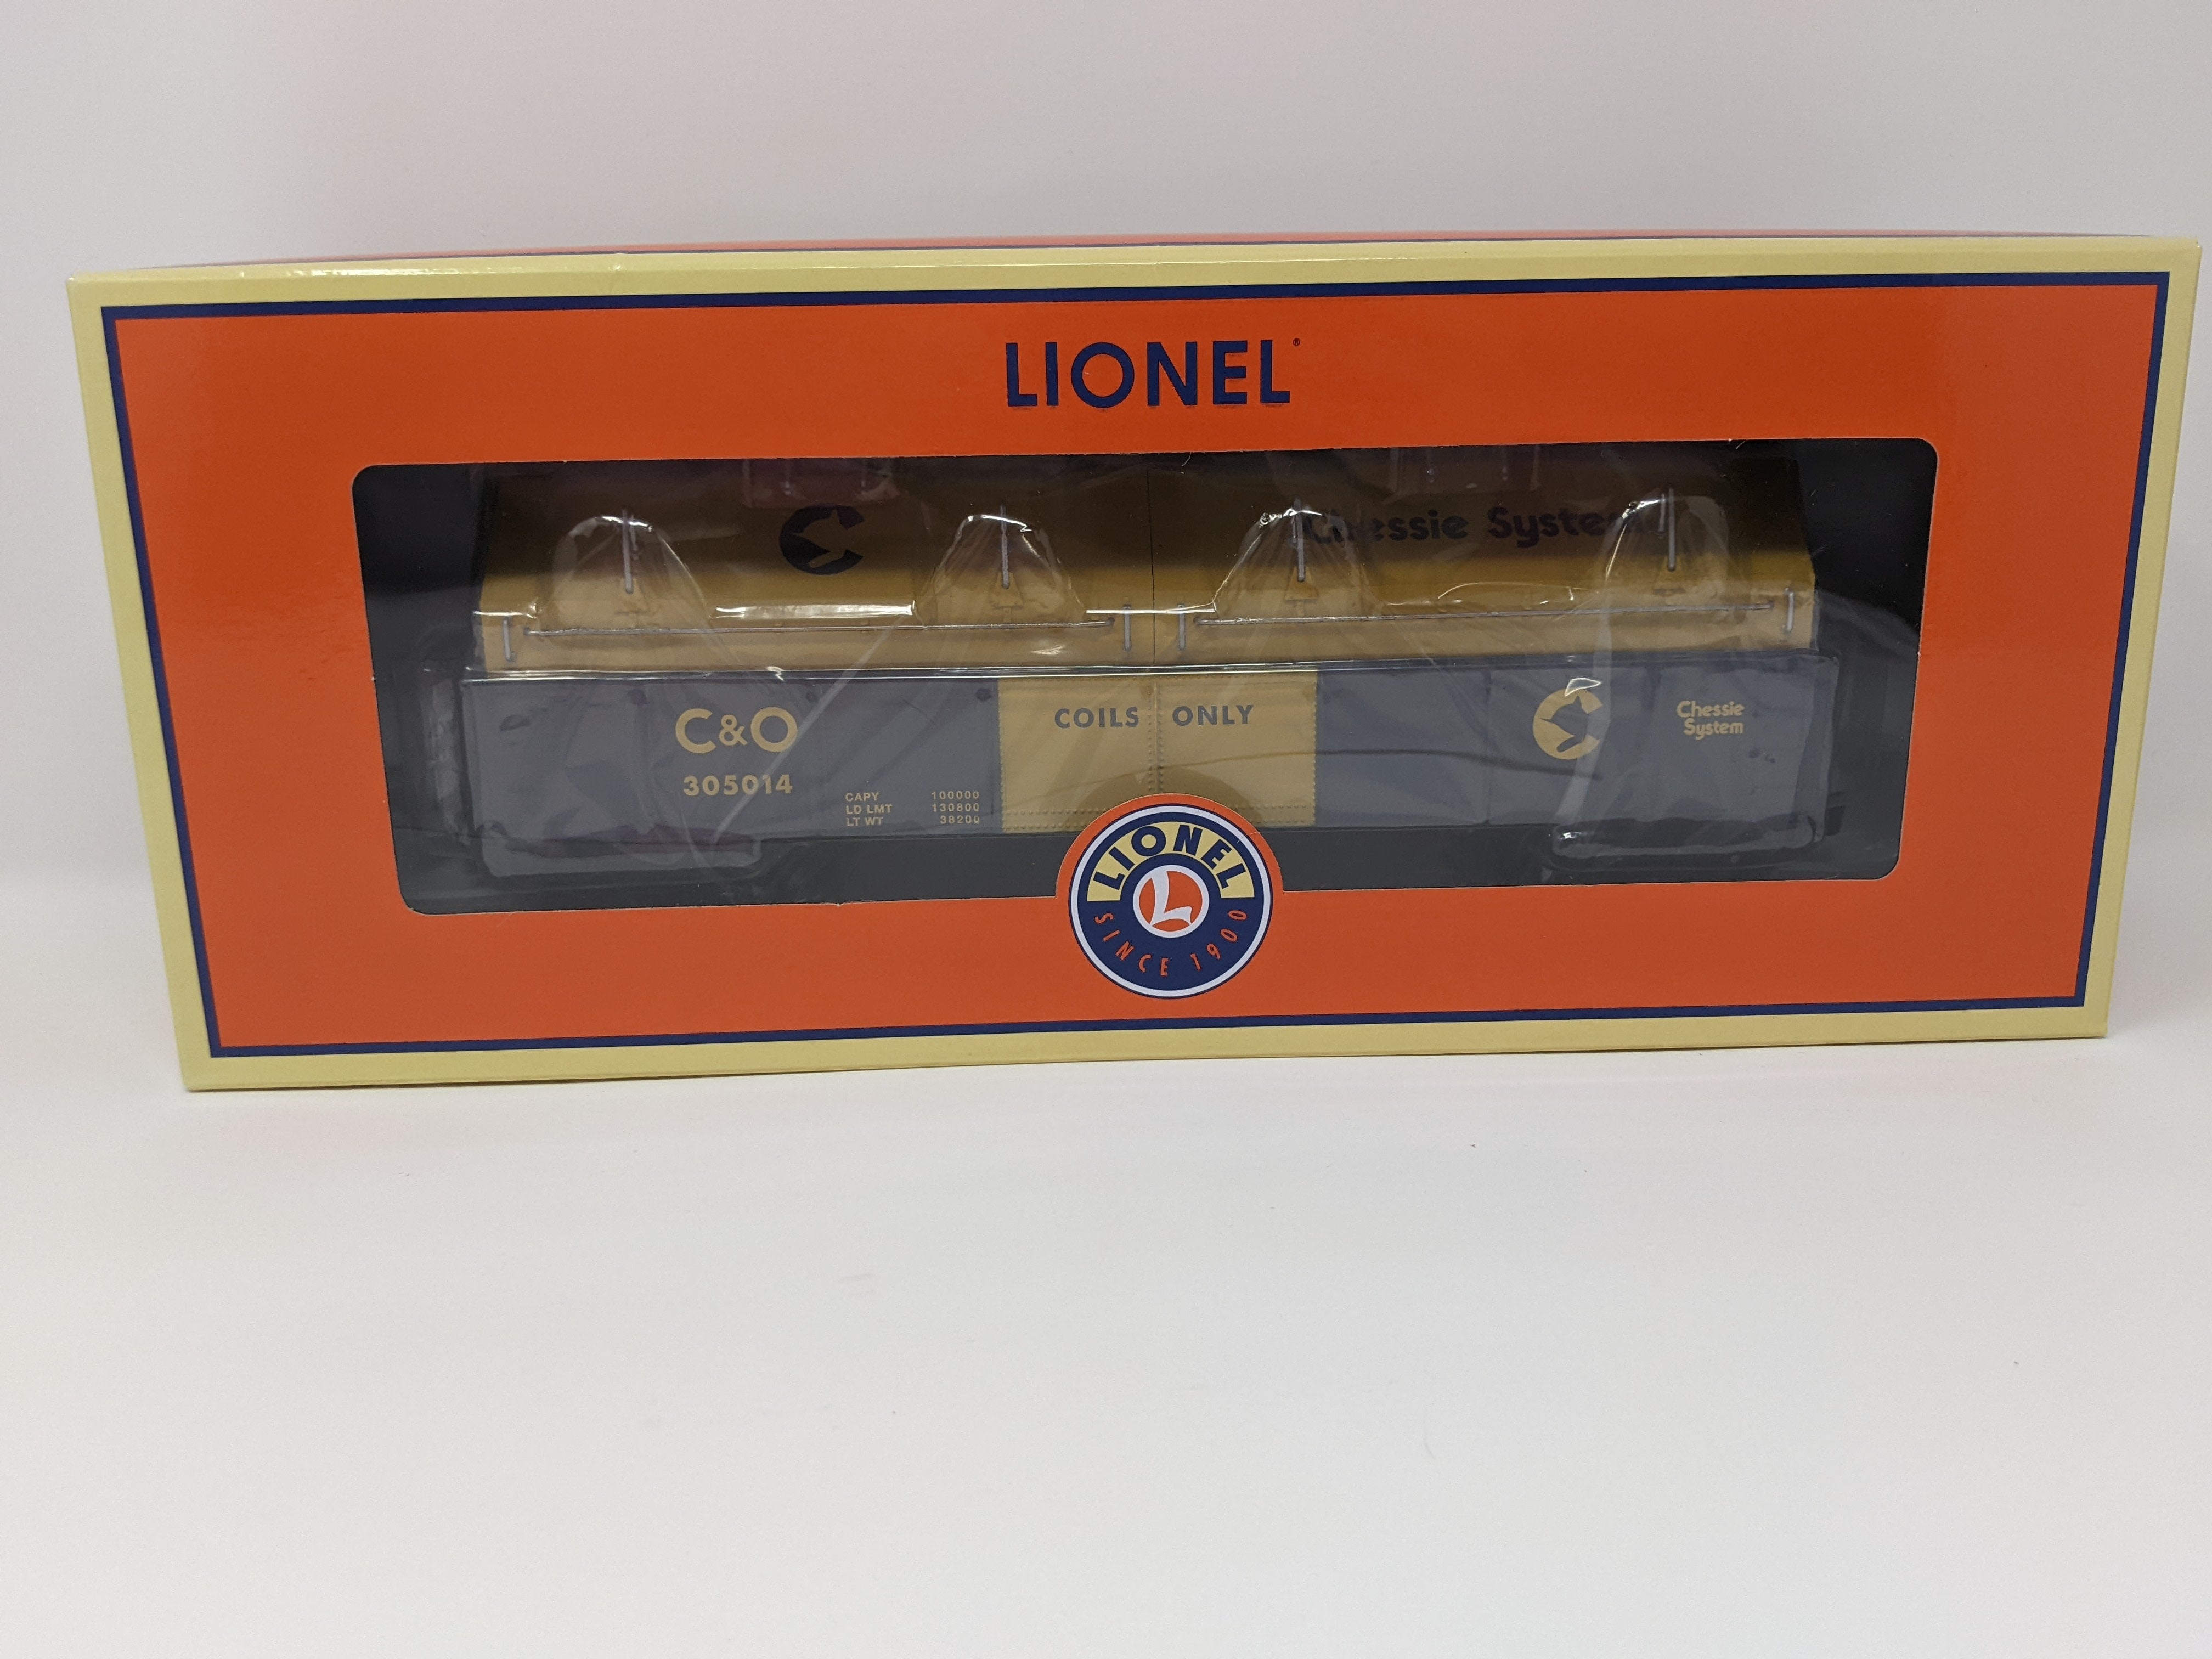 Lionel 2043142 O, Standard Gondola, Chessie System CO #305014